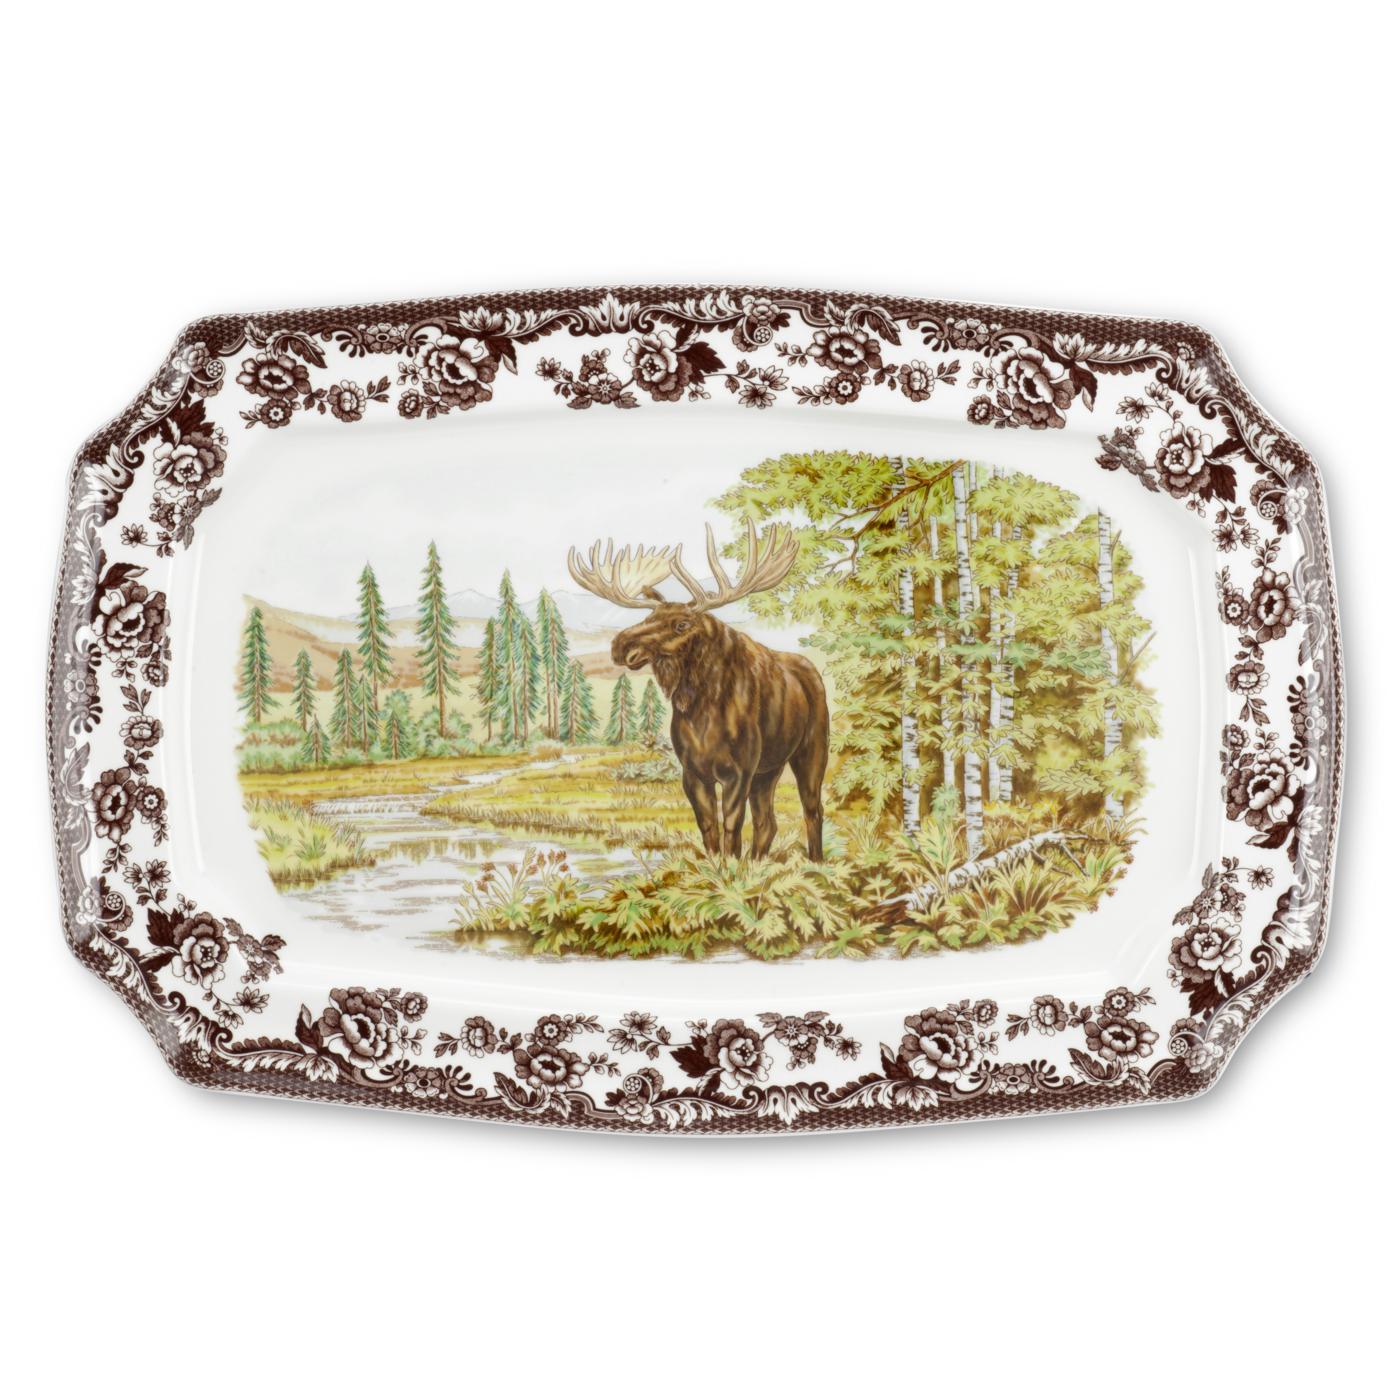 Woodland Rectangular Platter 17.5 Inch, Moose image number null